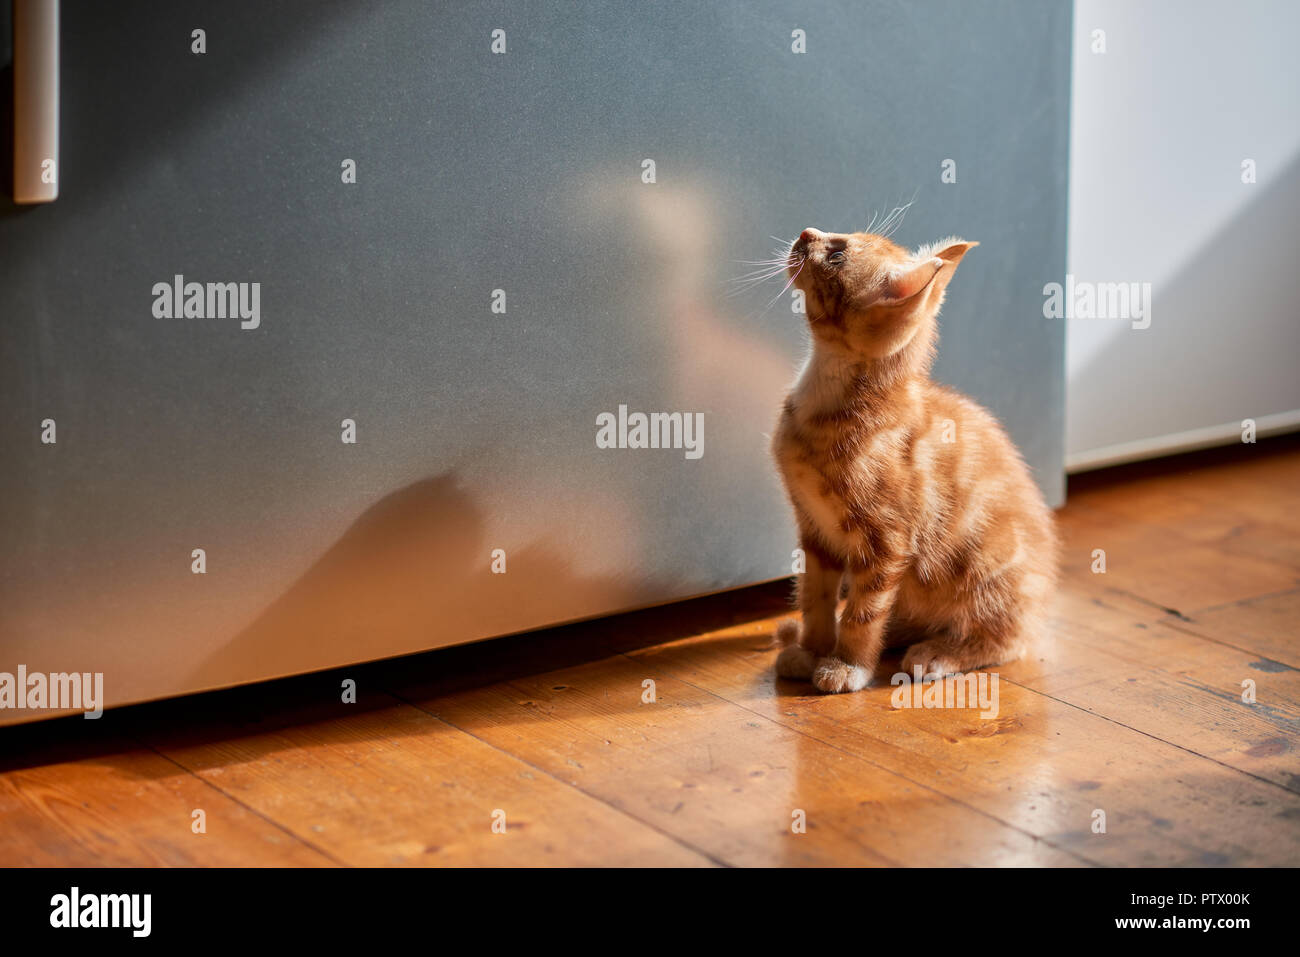 Splendido lo zenzero tabby gattino seduto su un piano cucina cercando un frigo. Foto Stock